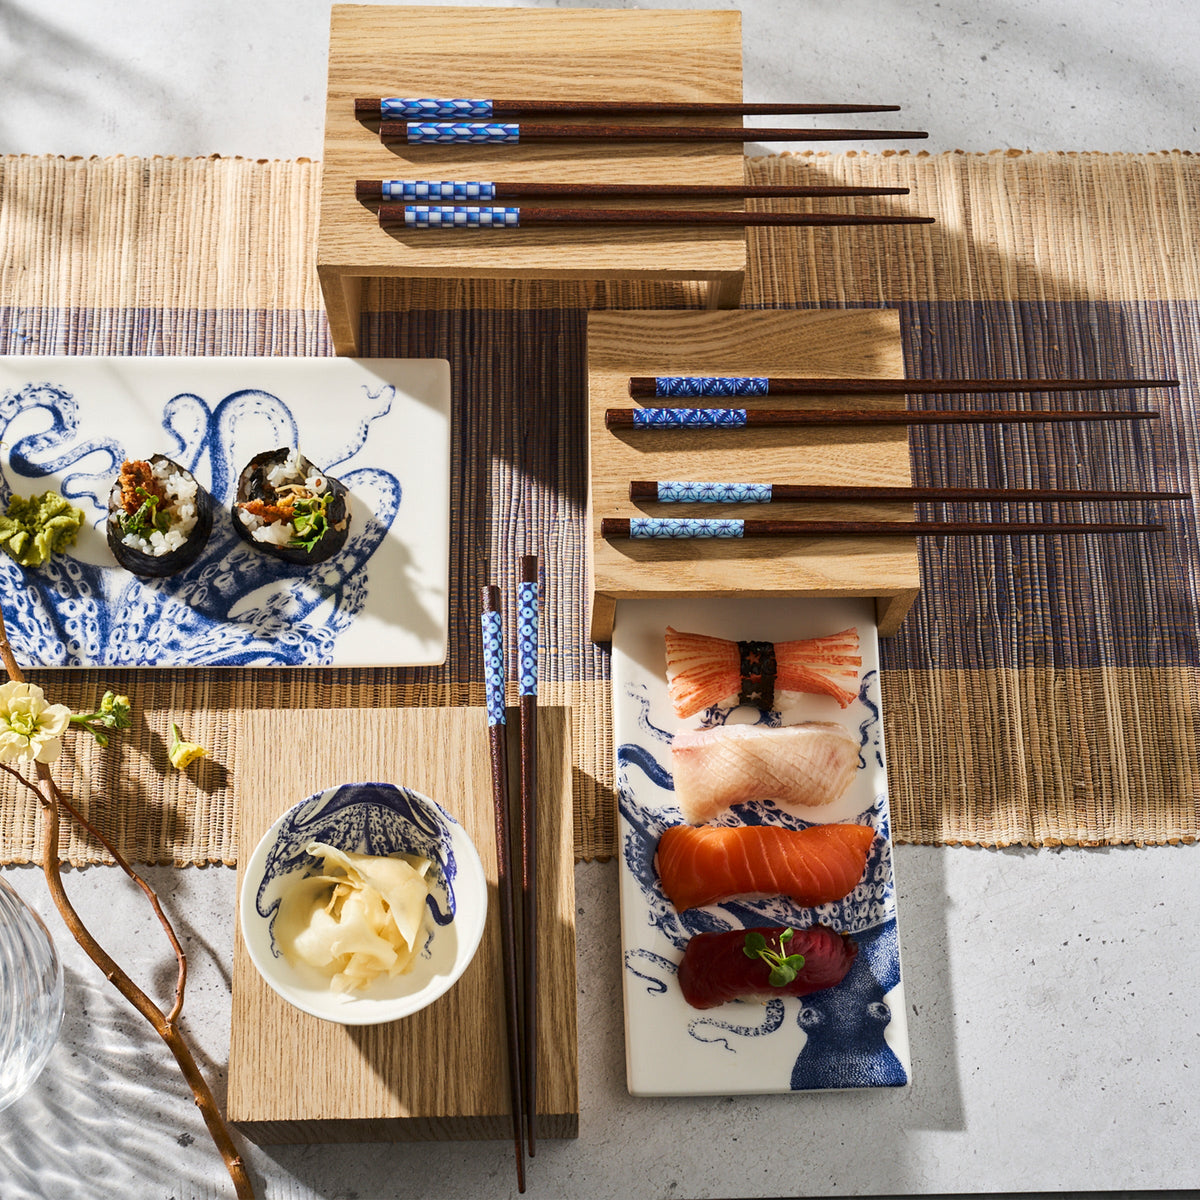 Yokohama Chopsticks and plates on a table, placed next to sushi trays. (Brand: Miya, Inc.)